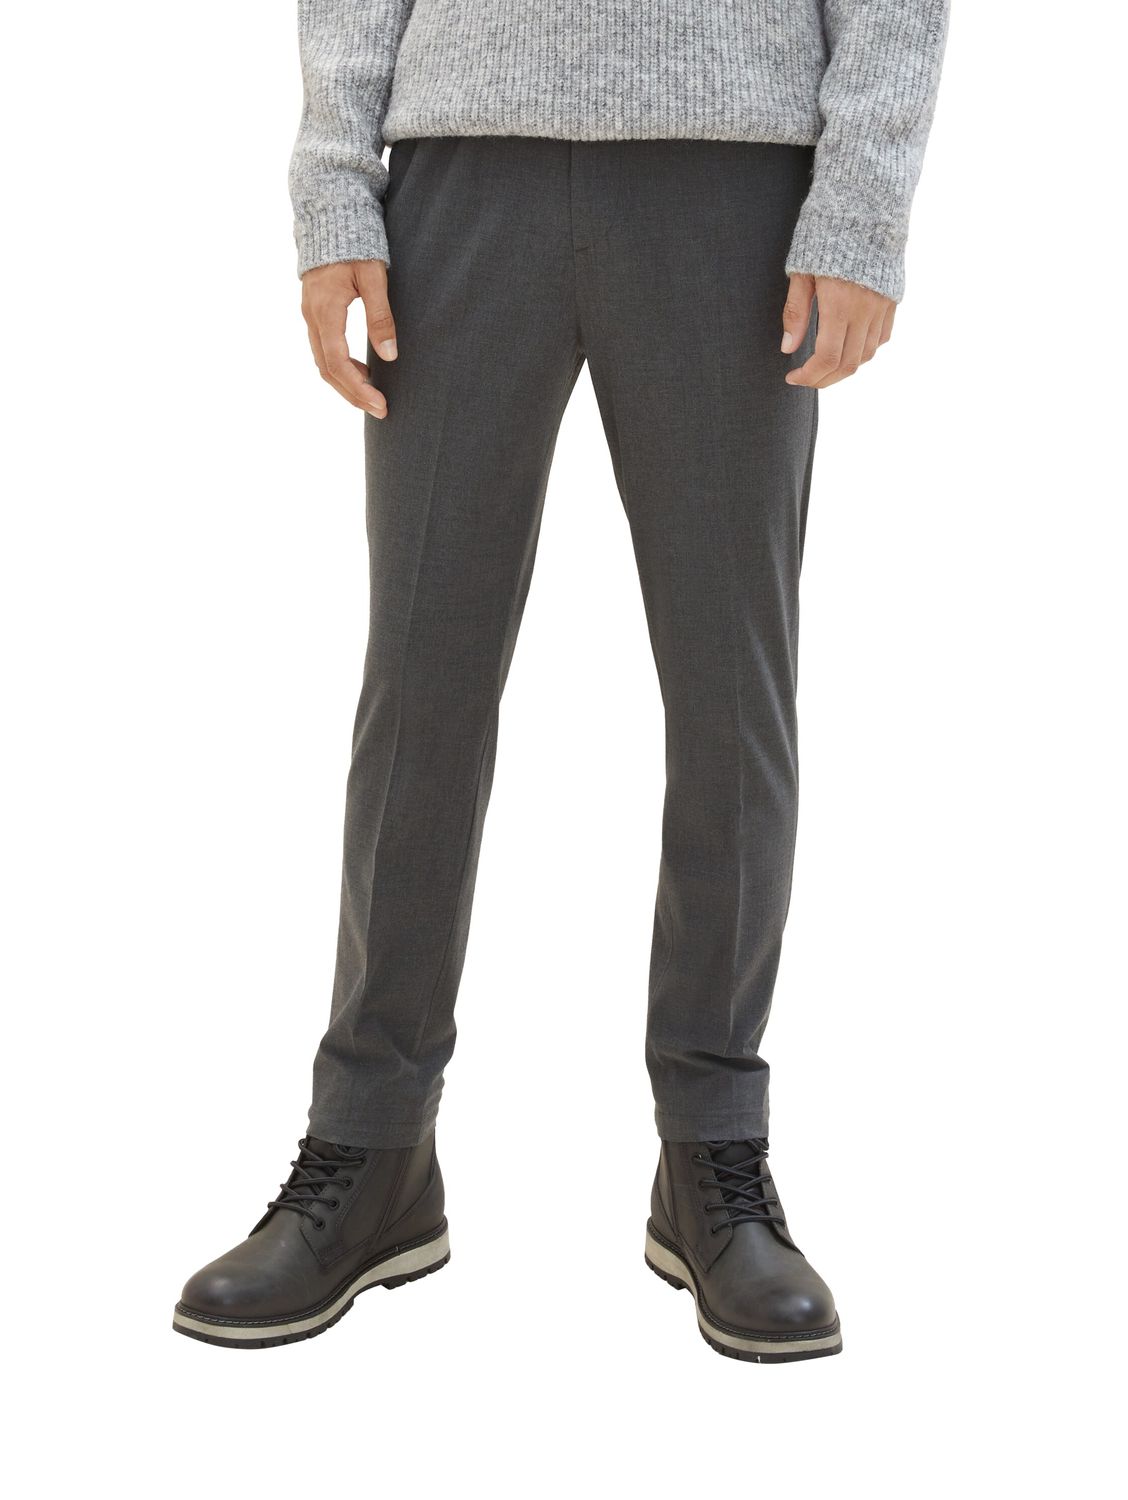 Тканевые брюки TOM TAILOR Denim Stoff/Chino RELAXED TAPERED CHINO comfort/relaxed, серый худи tom tailor размер m серый